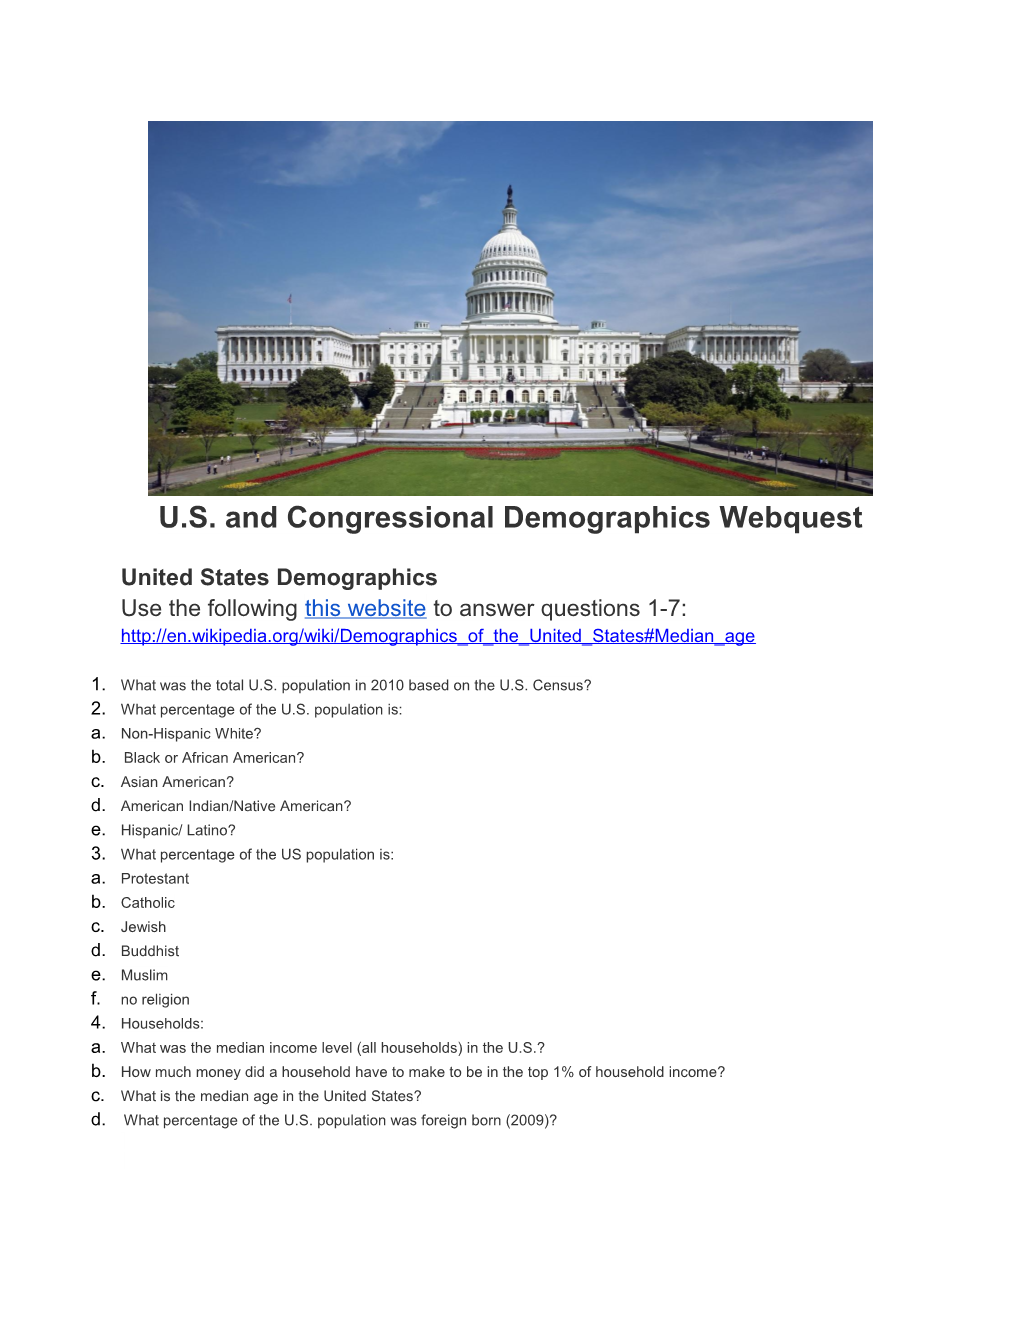 Congressional Demographics Webquest